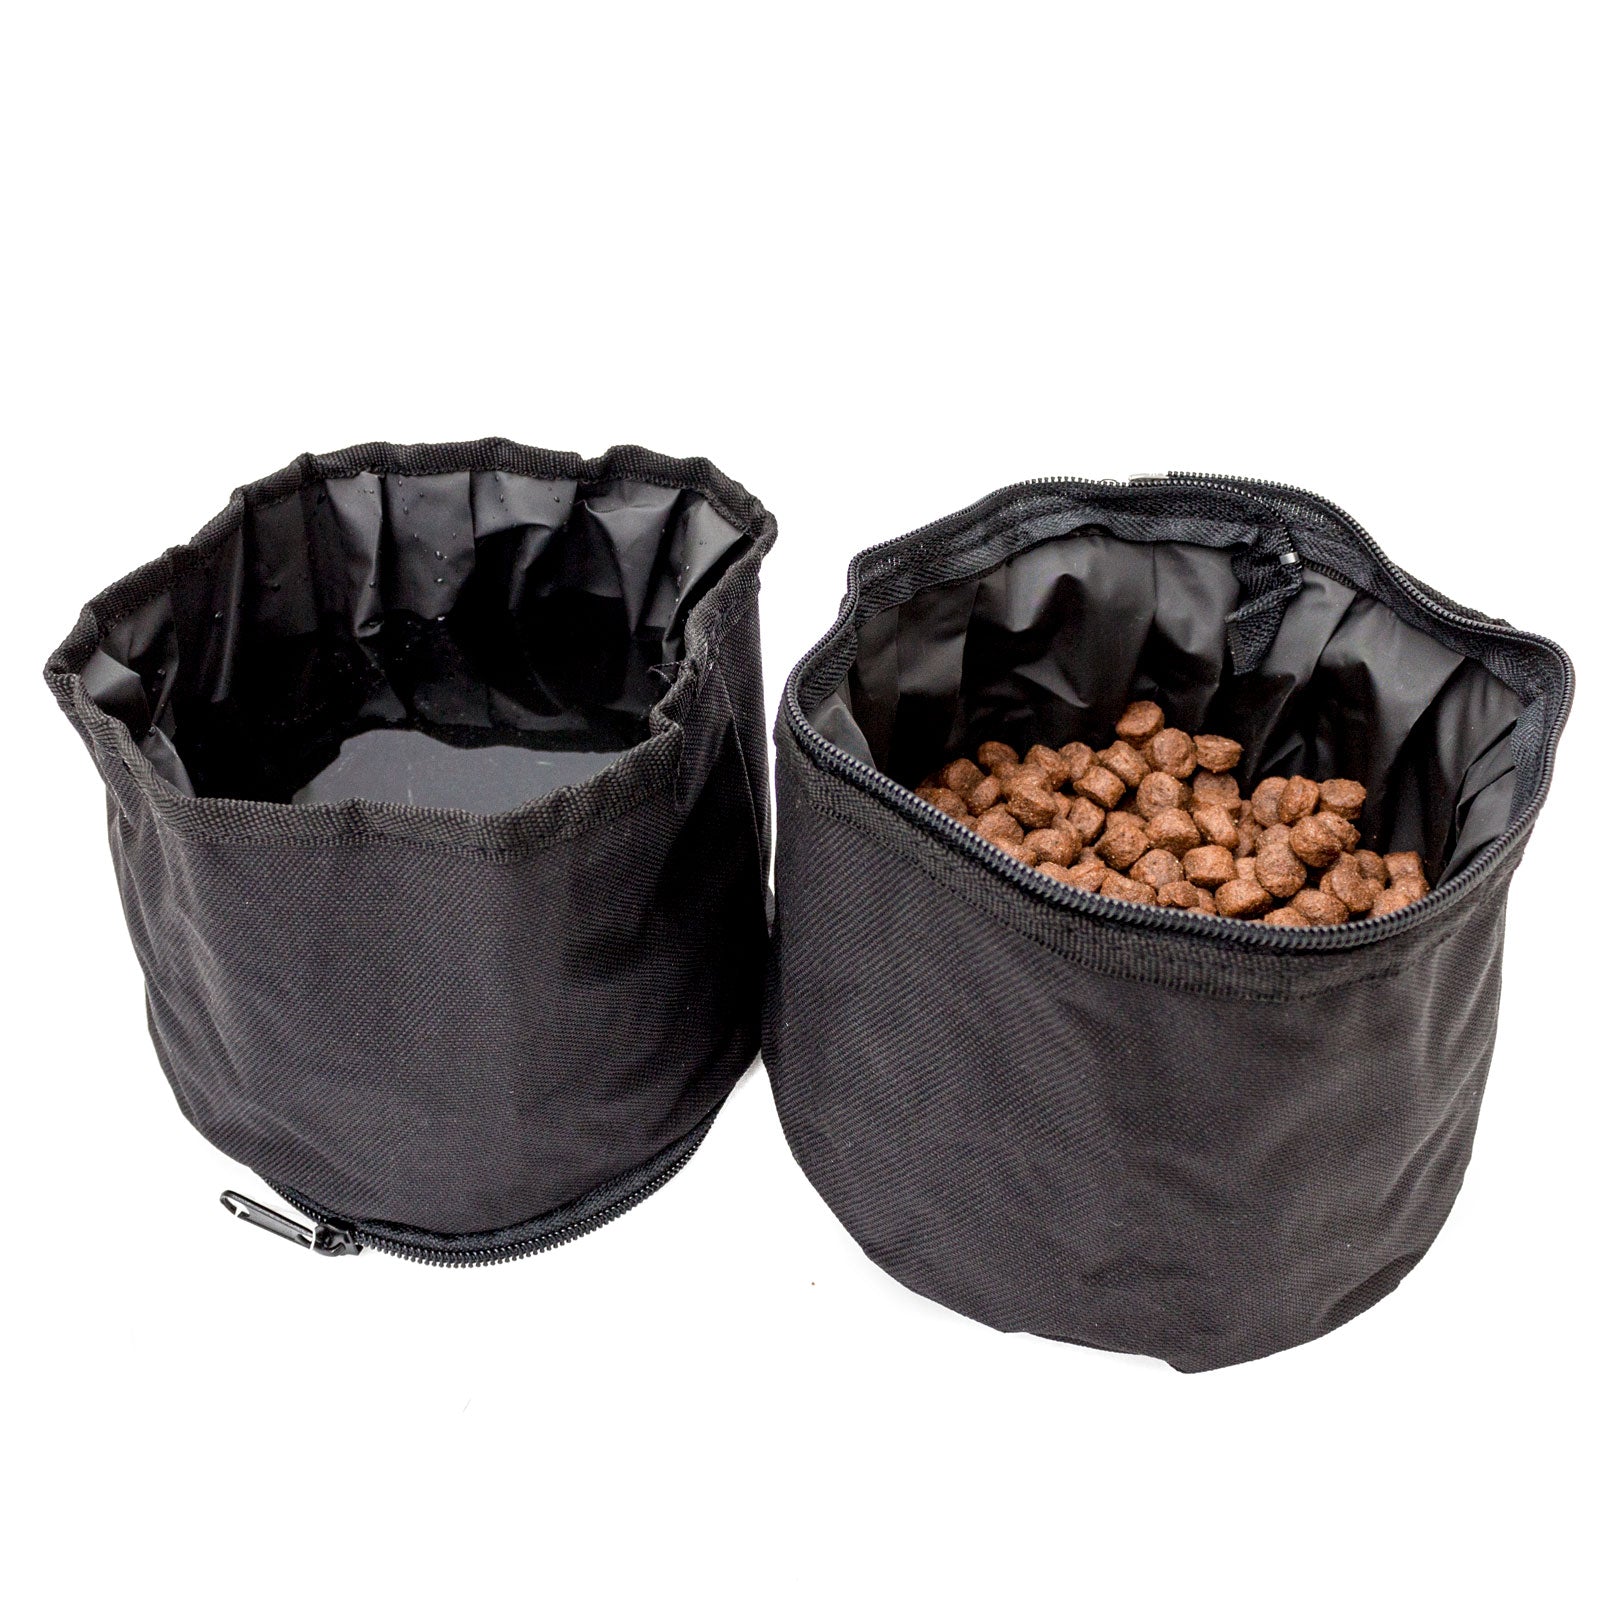 SAINT BERNARD - Double Portable Travel Dog Bowl - Food And Water